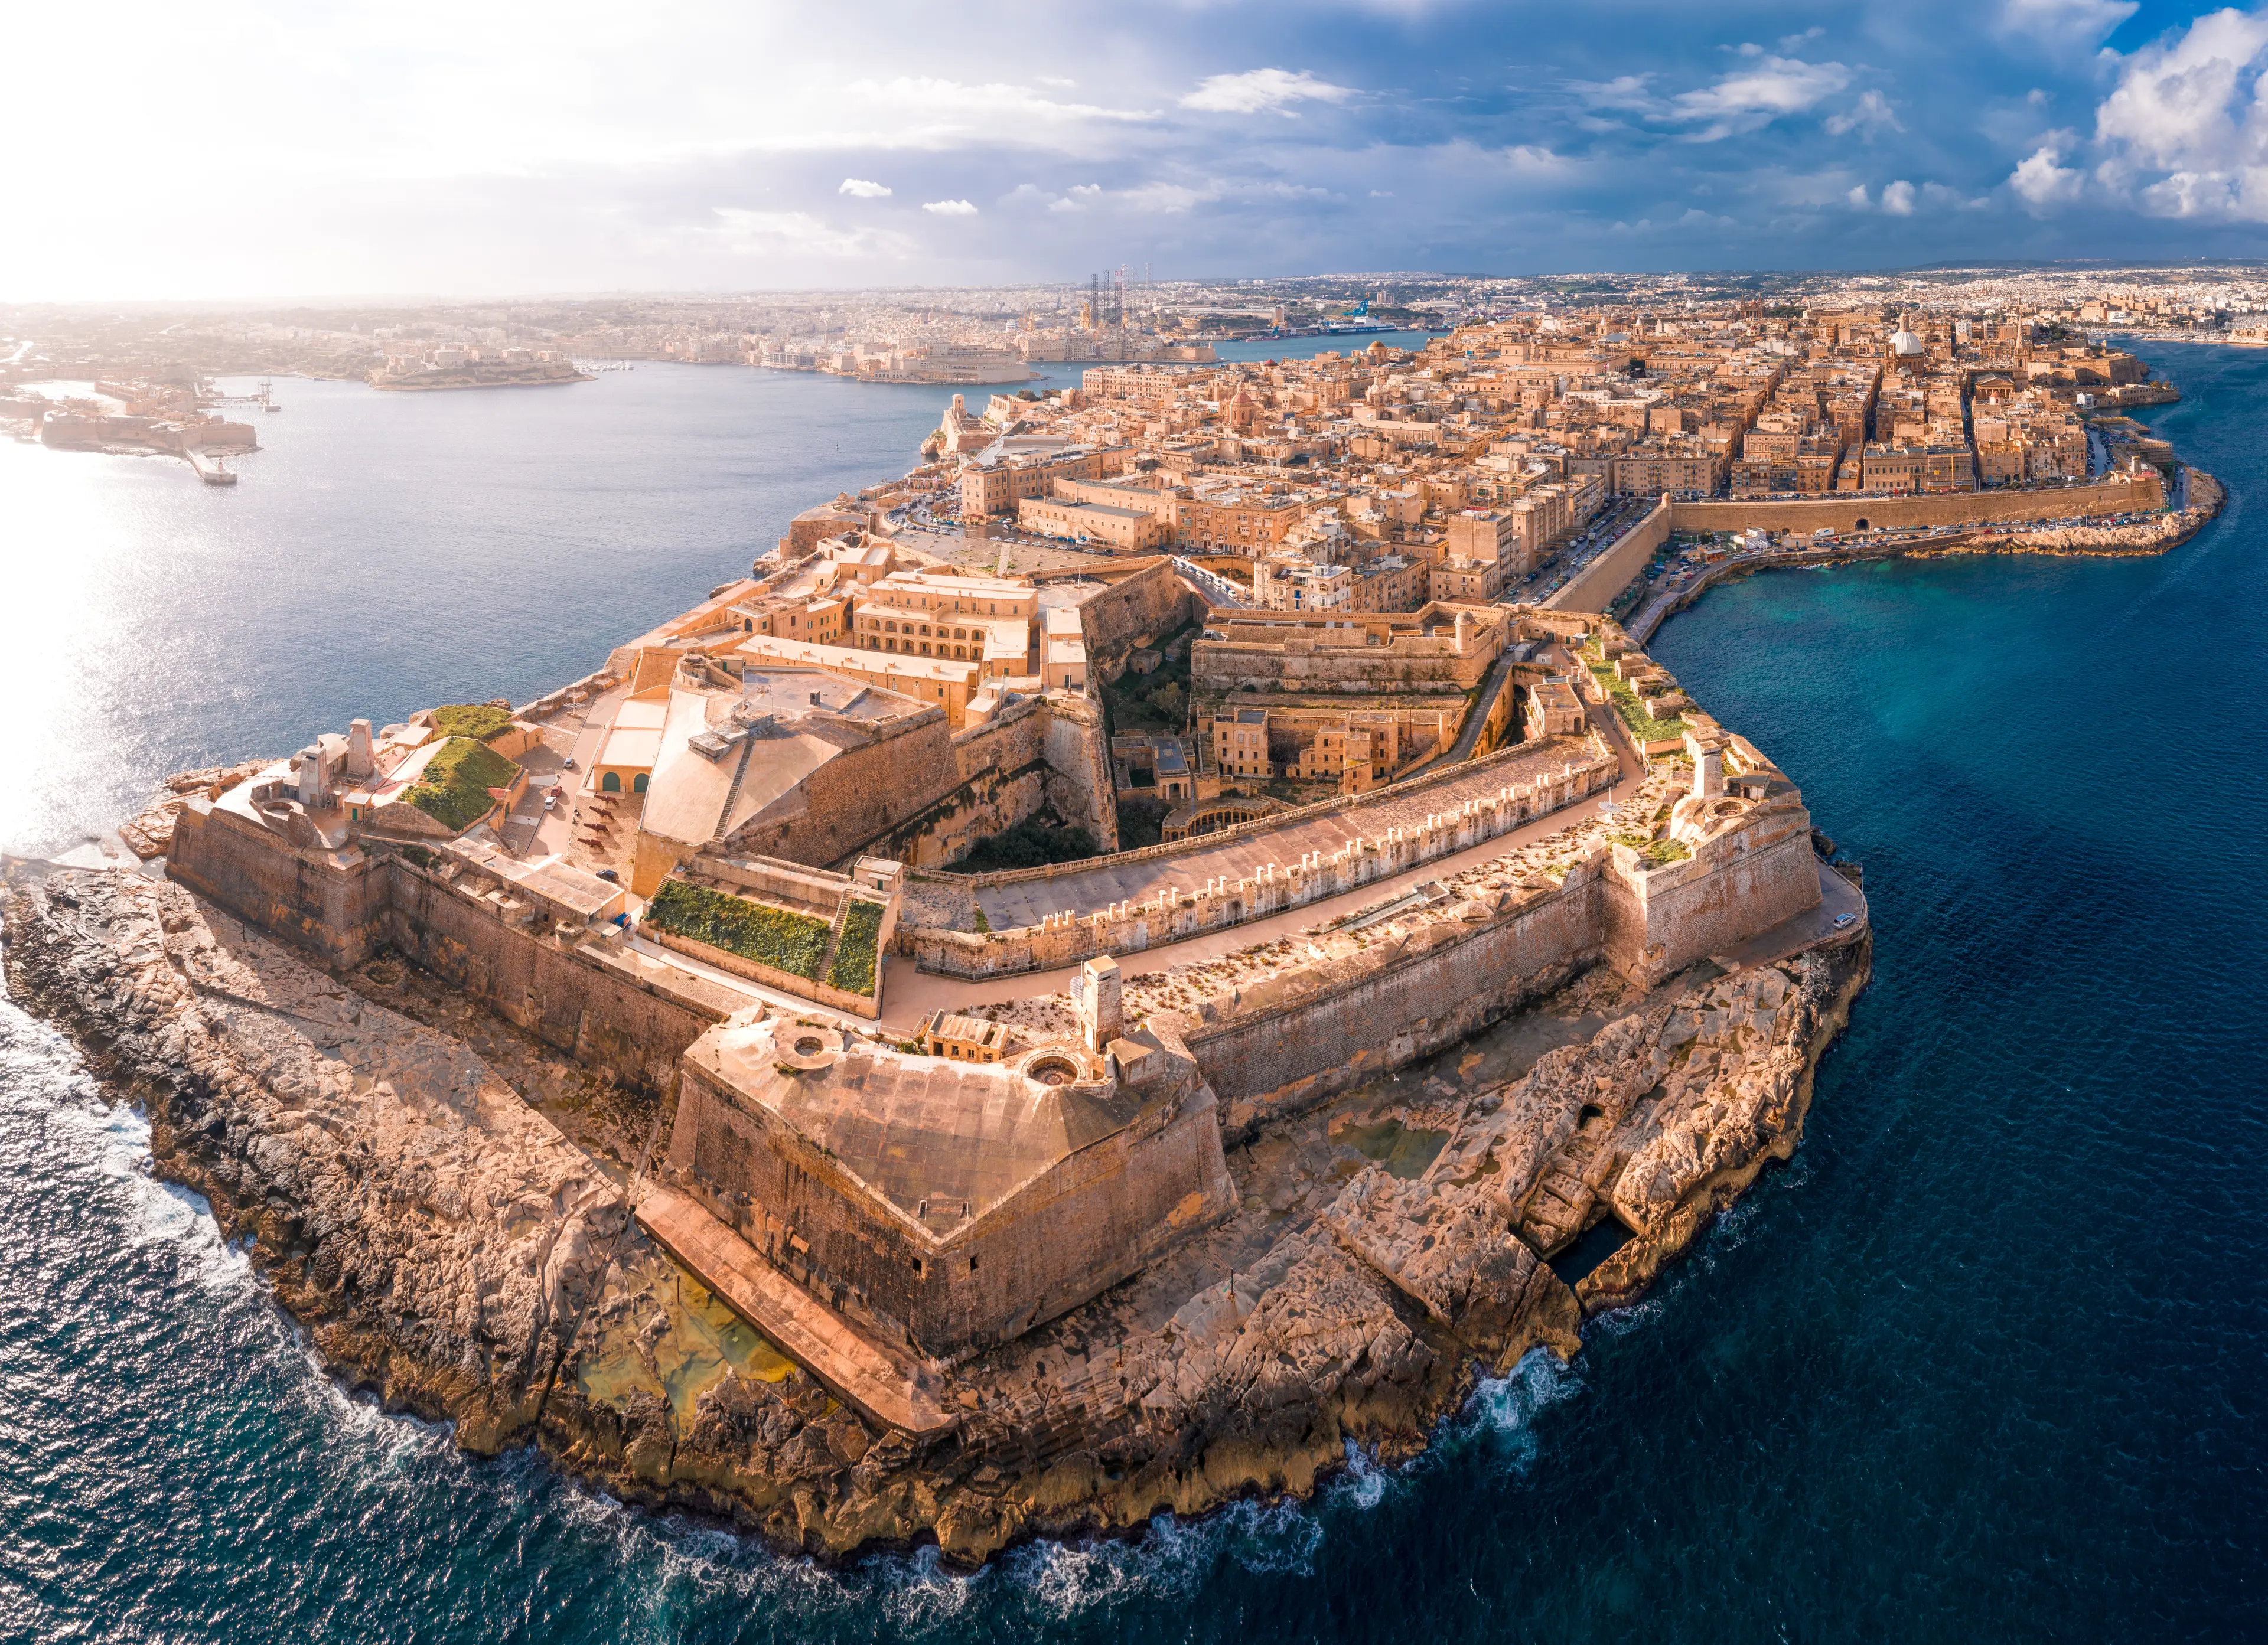 2-Day Adventure: Off-the-Beaten-Path Experiences in Valletta, Malta